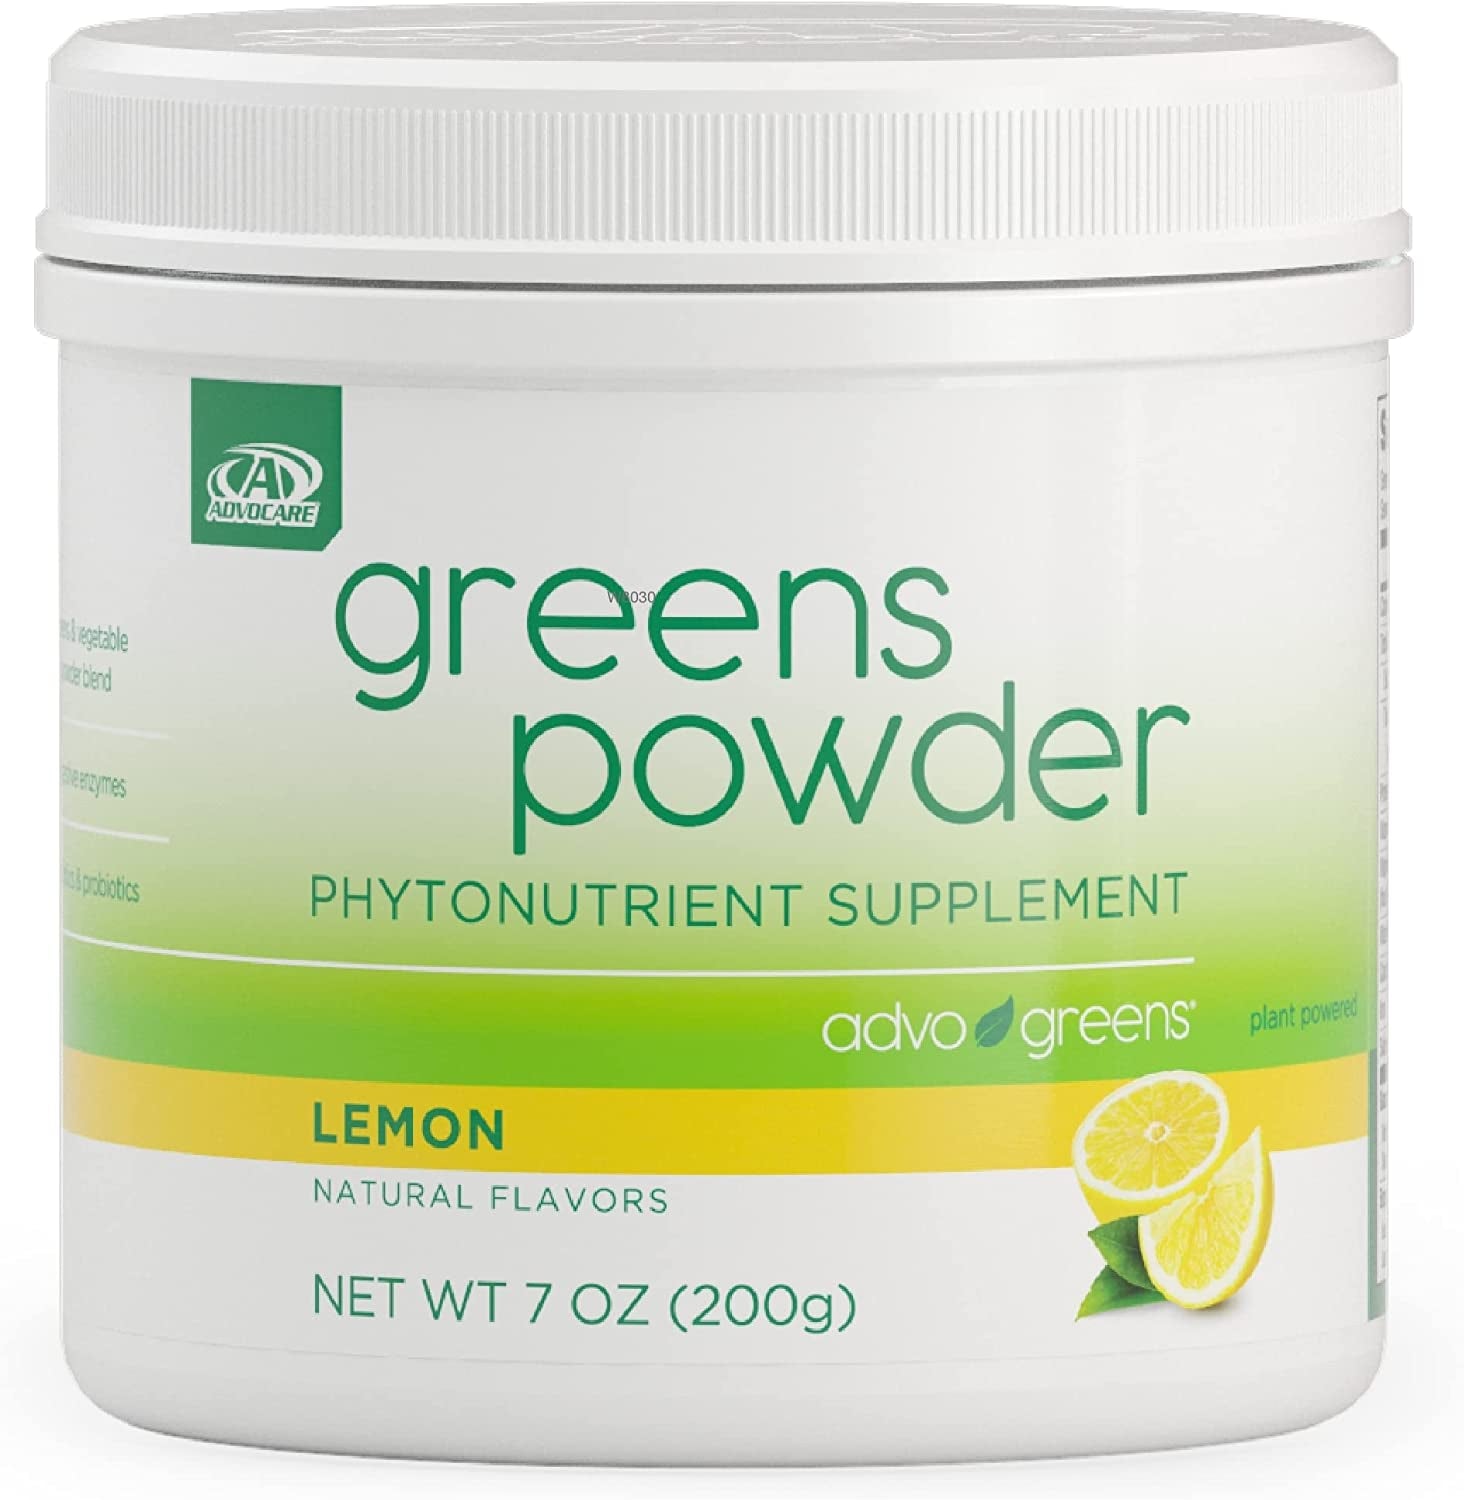 Advocare Greens Powder Phytonutrient Supplement - Veggie Powder with Vitamin C, E & a - Fiber Supplement & Vegetable Replacement - Multivitamin for Digestion & Antioxidants - Lemon Flavor - 7 Oz